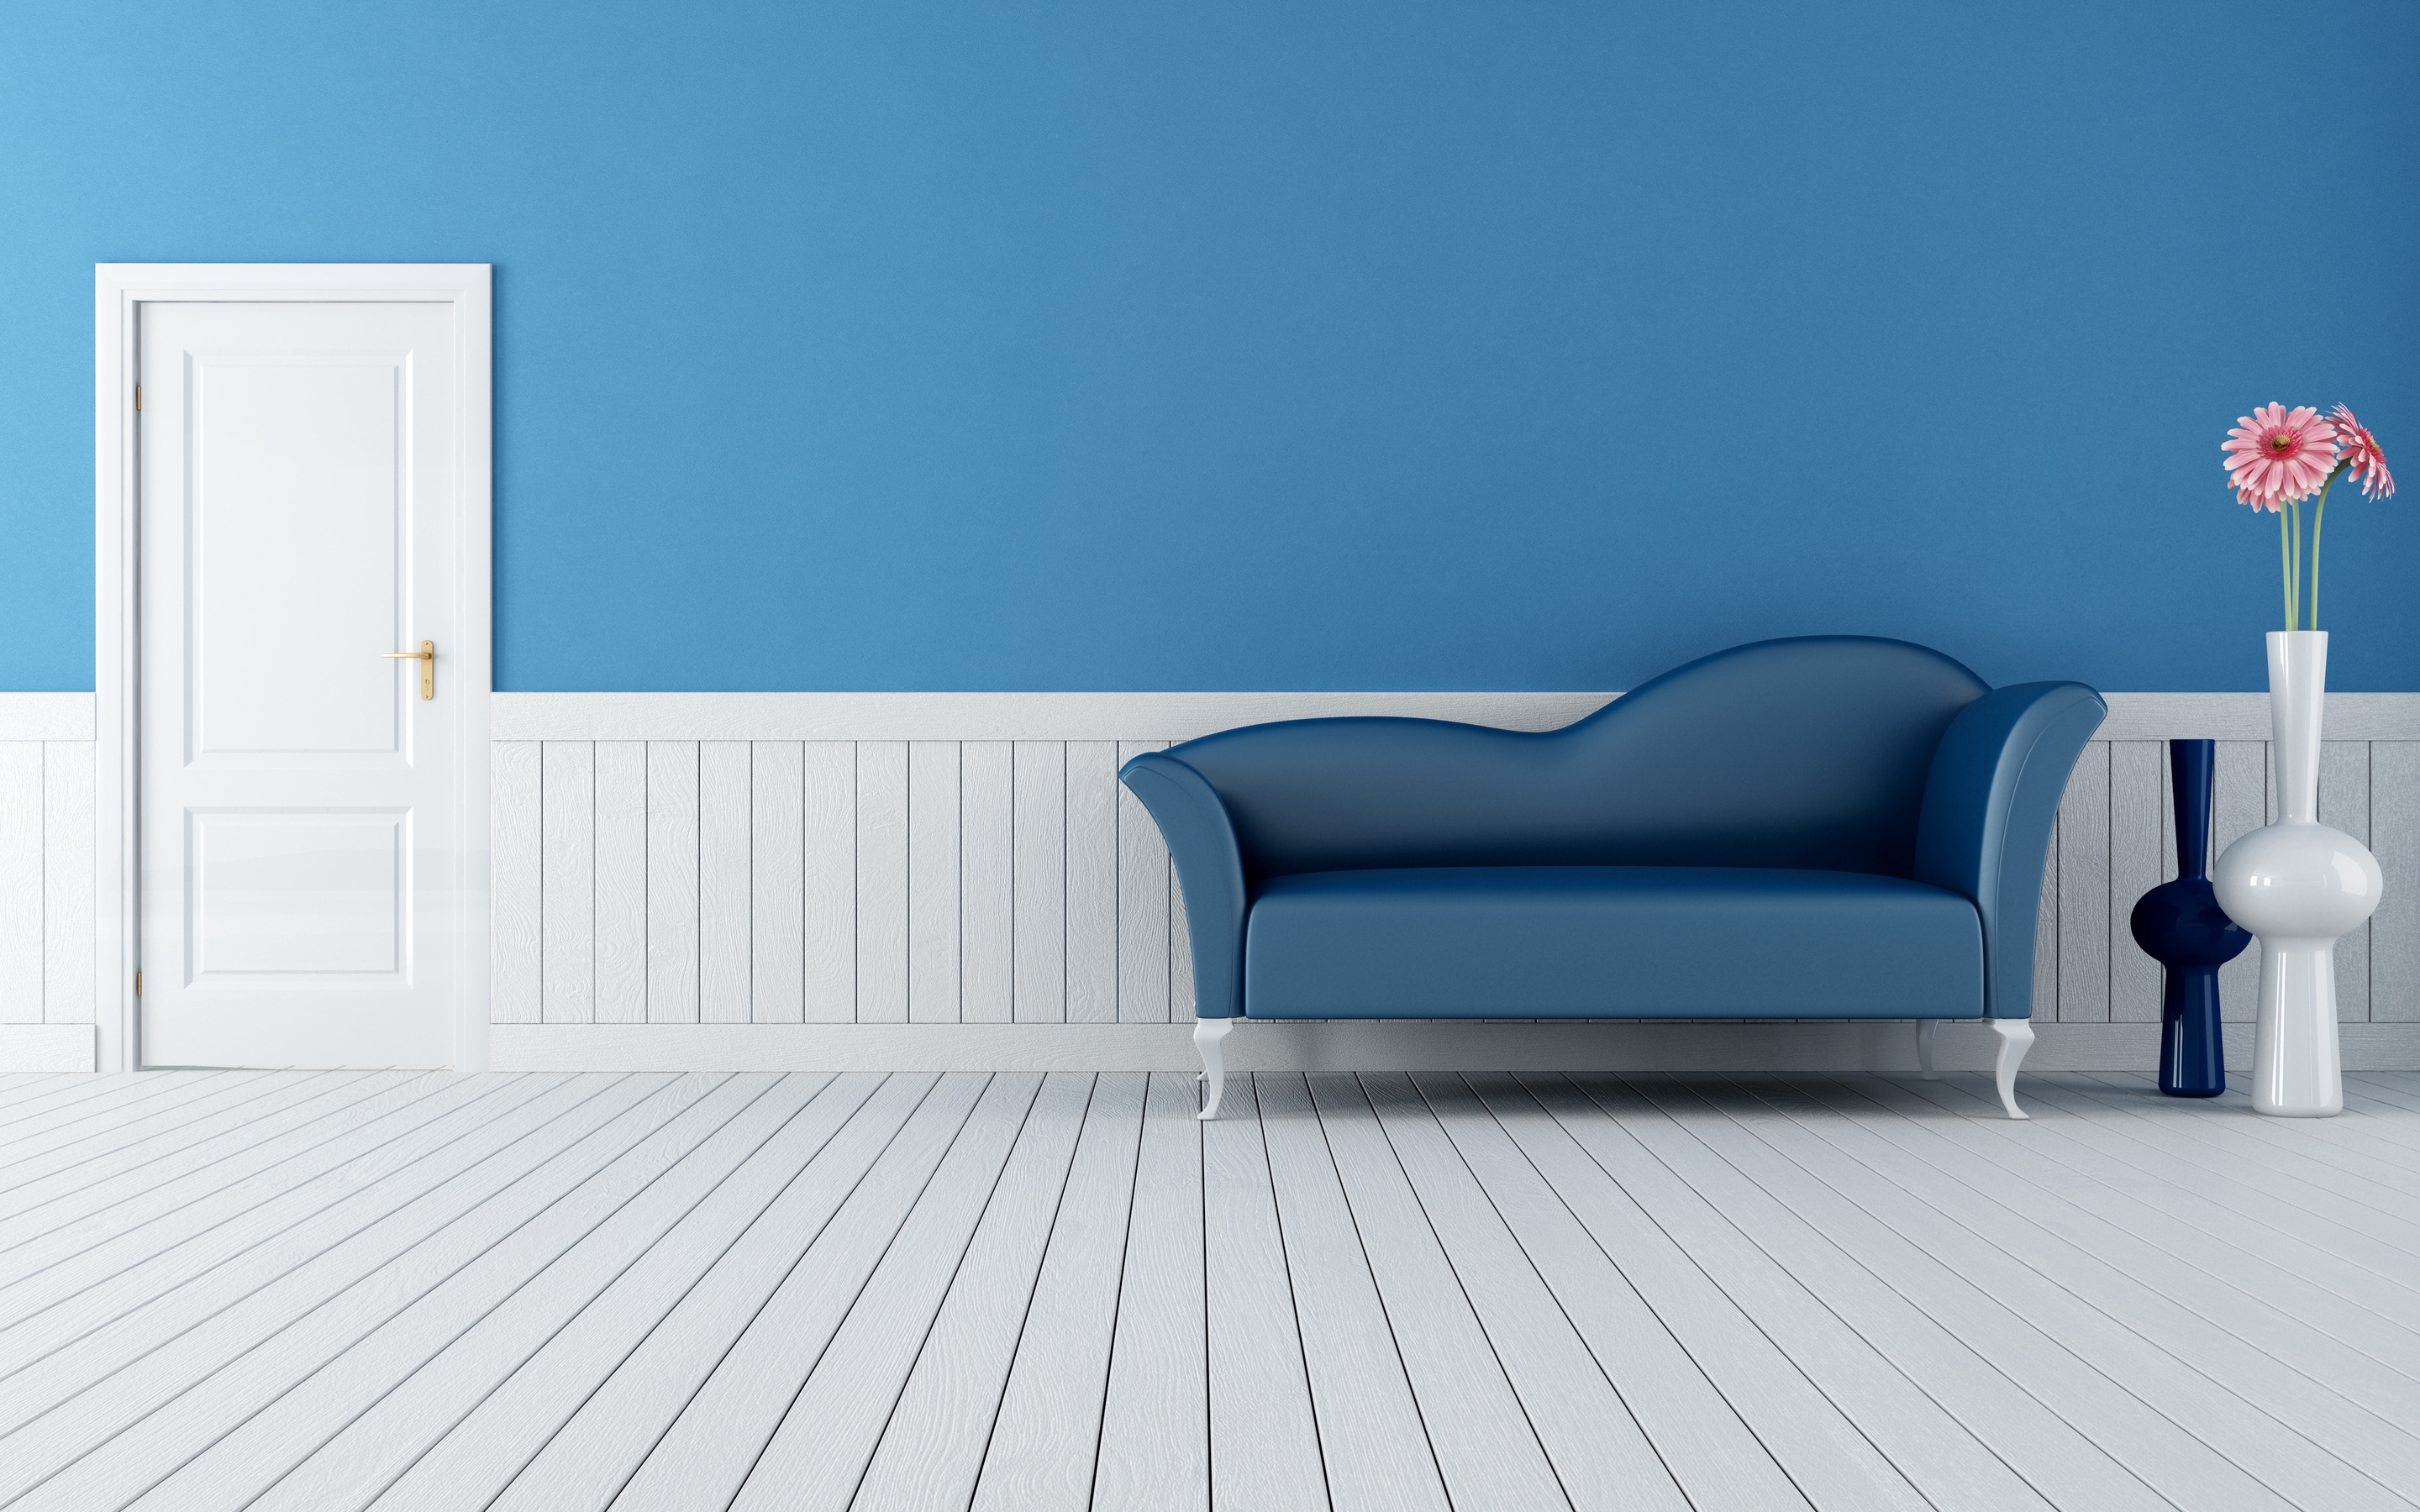 Modern Sofa Design for 2880 x 1800 Retina Display resolution